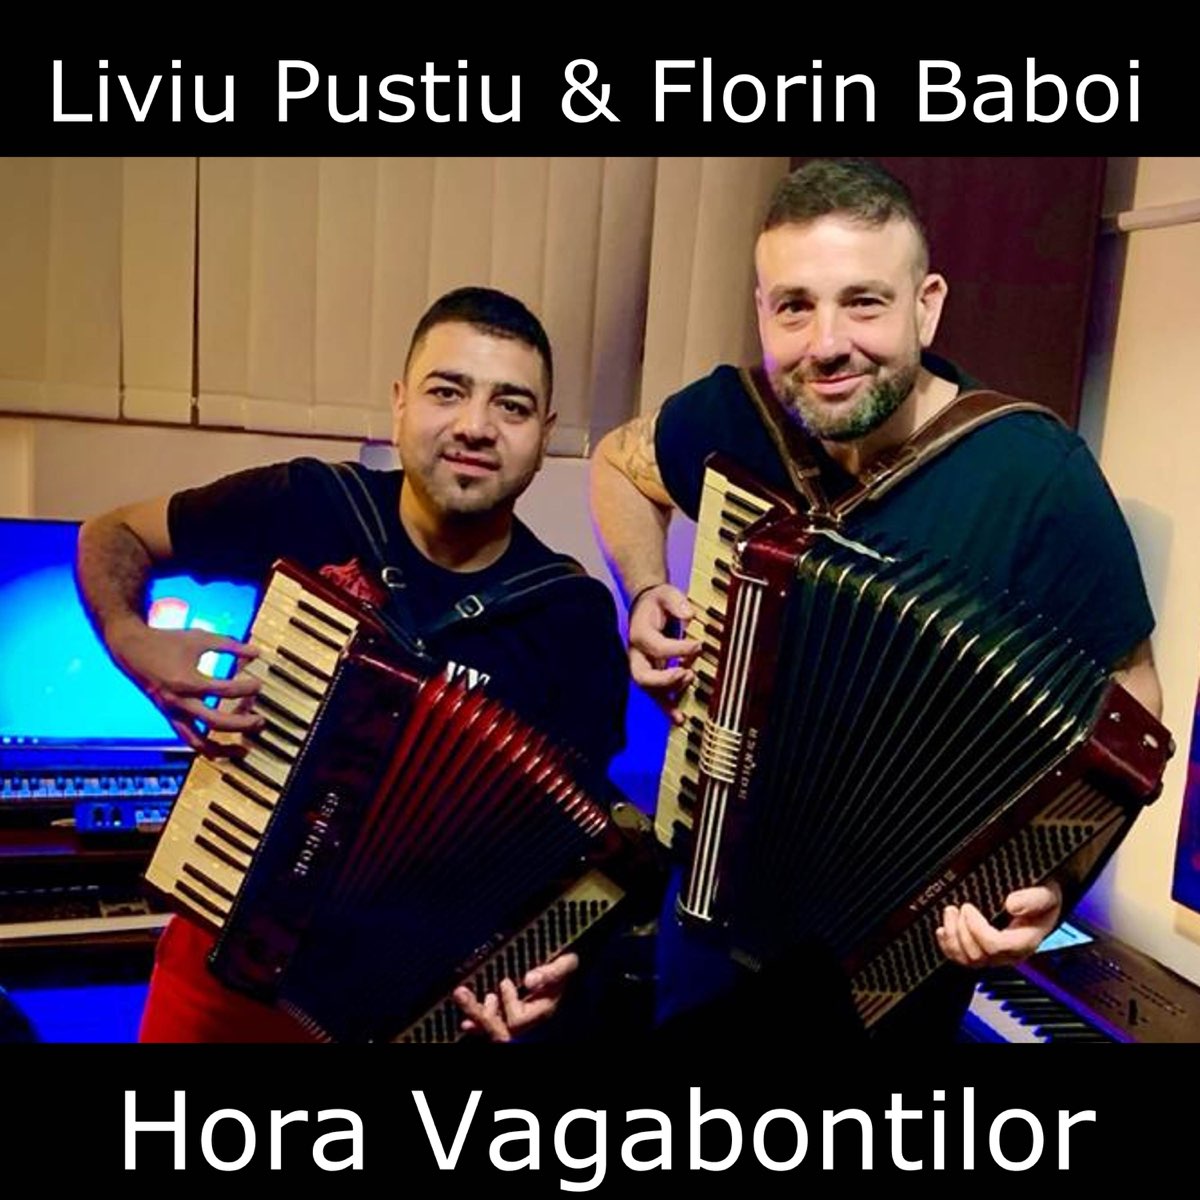 Hora Vagabontilor - Single by Liviu Pustiu & Florin Baboi on Apple Music